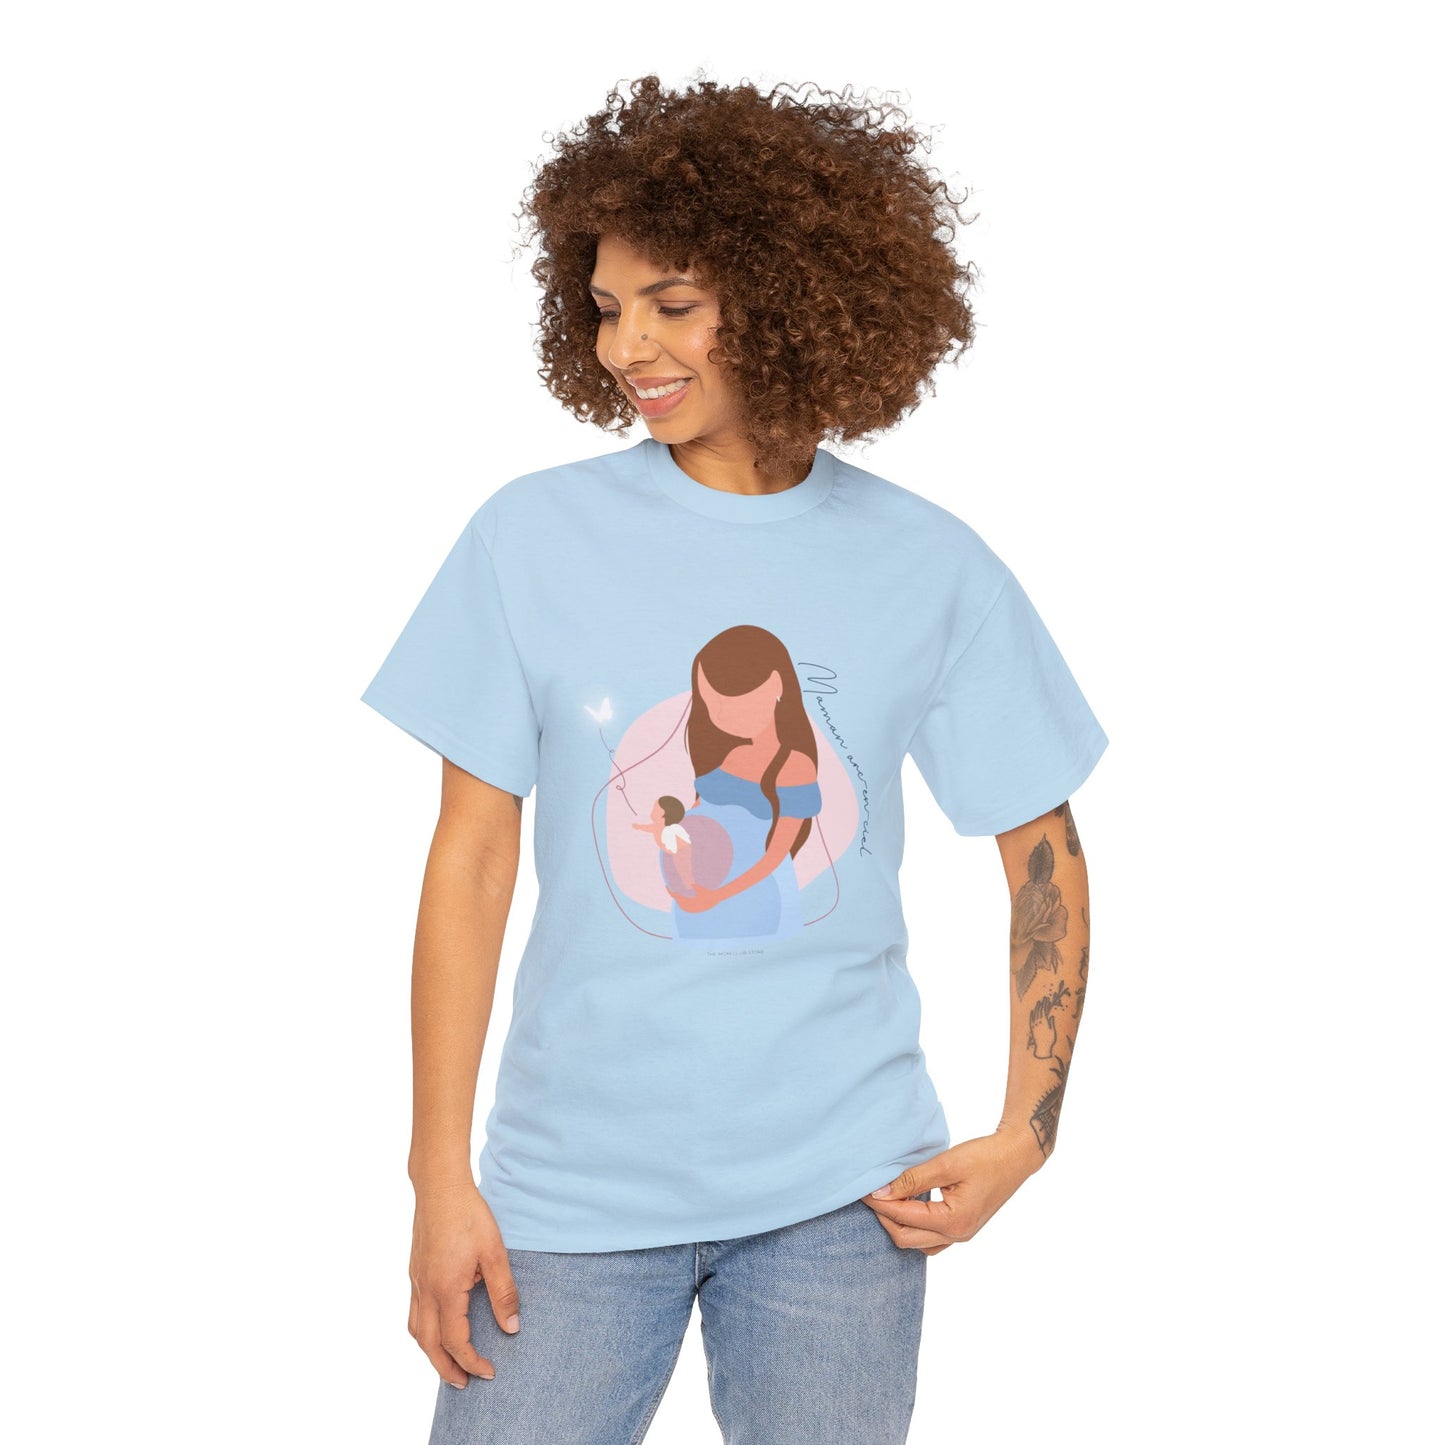 T-shirt maman arc-en-ciel - adulte